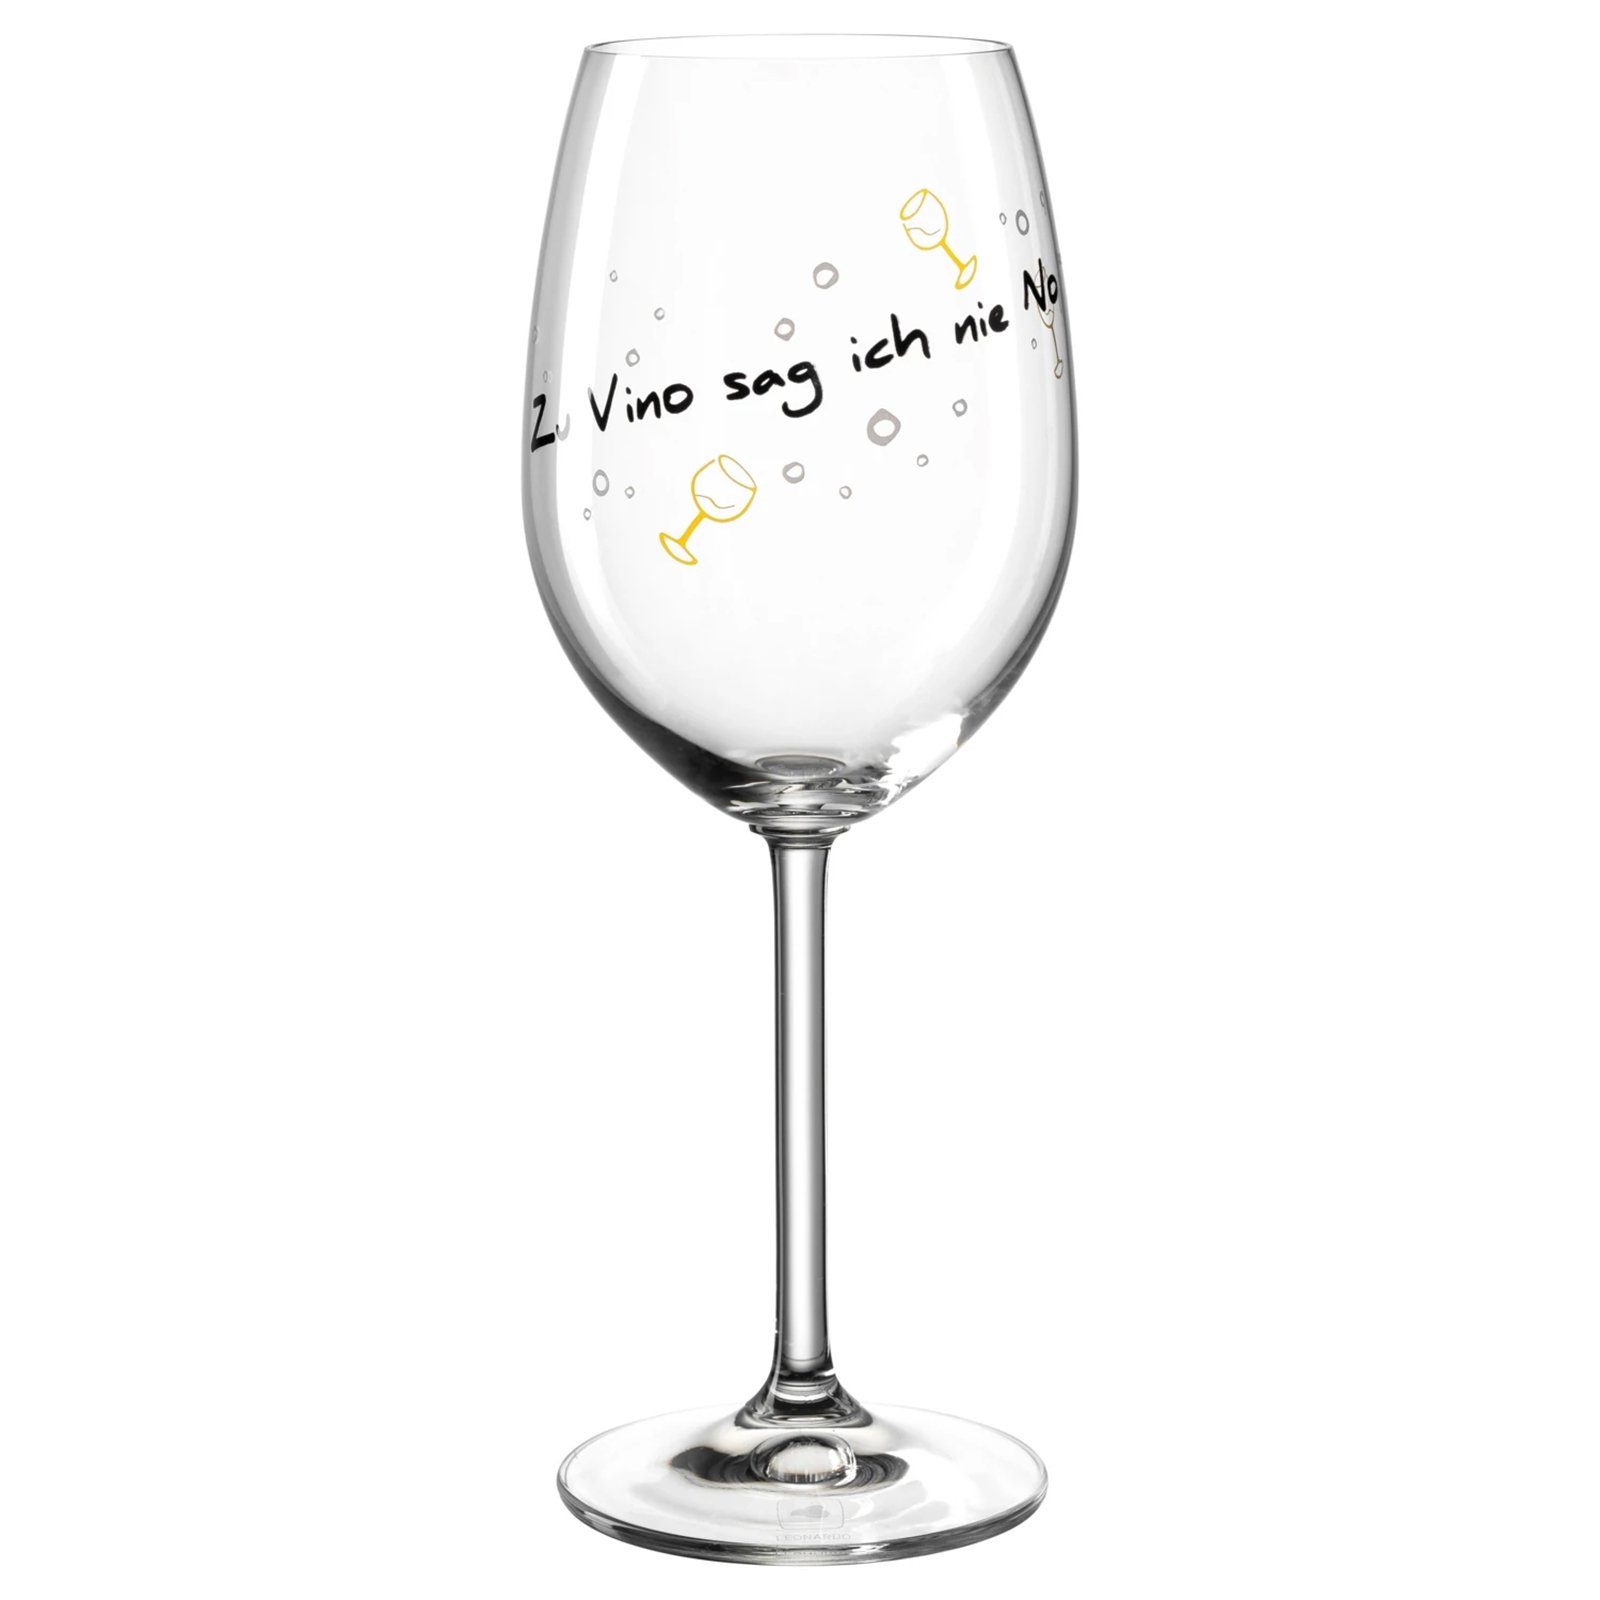 LEONARDO Rotweinglas Weinglas 460 ml 'Zu Vino sag ich nie No' PRESENTE, Glas, Rotweinglas Weißweinglas